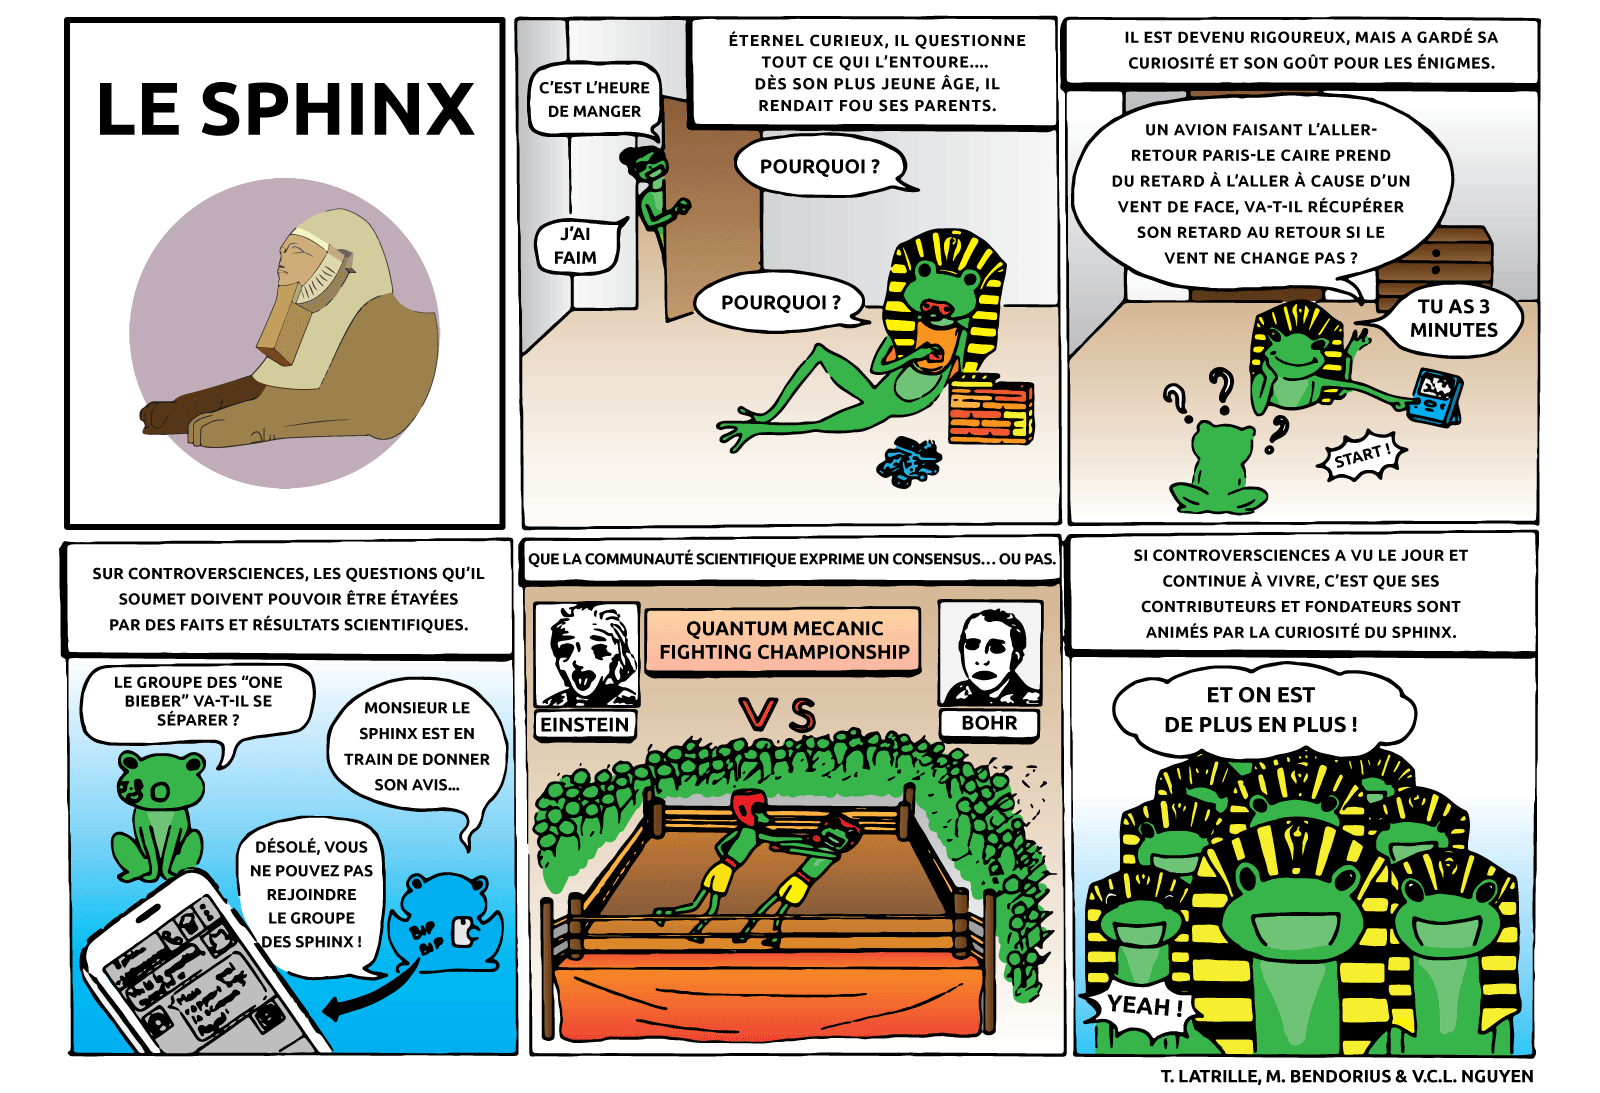 Le sphinx